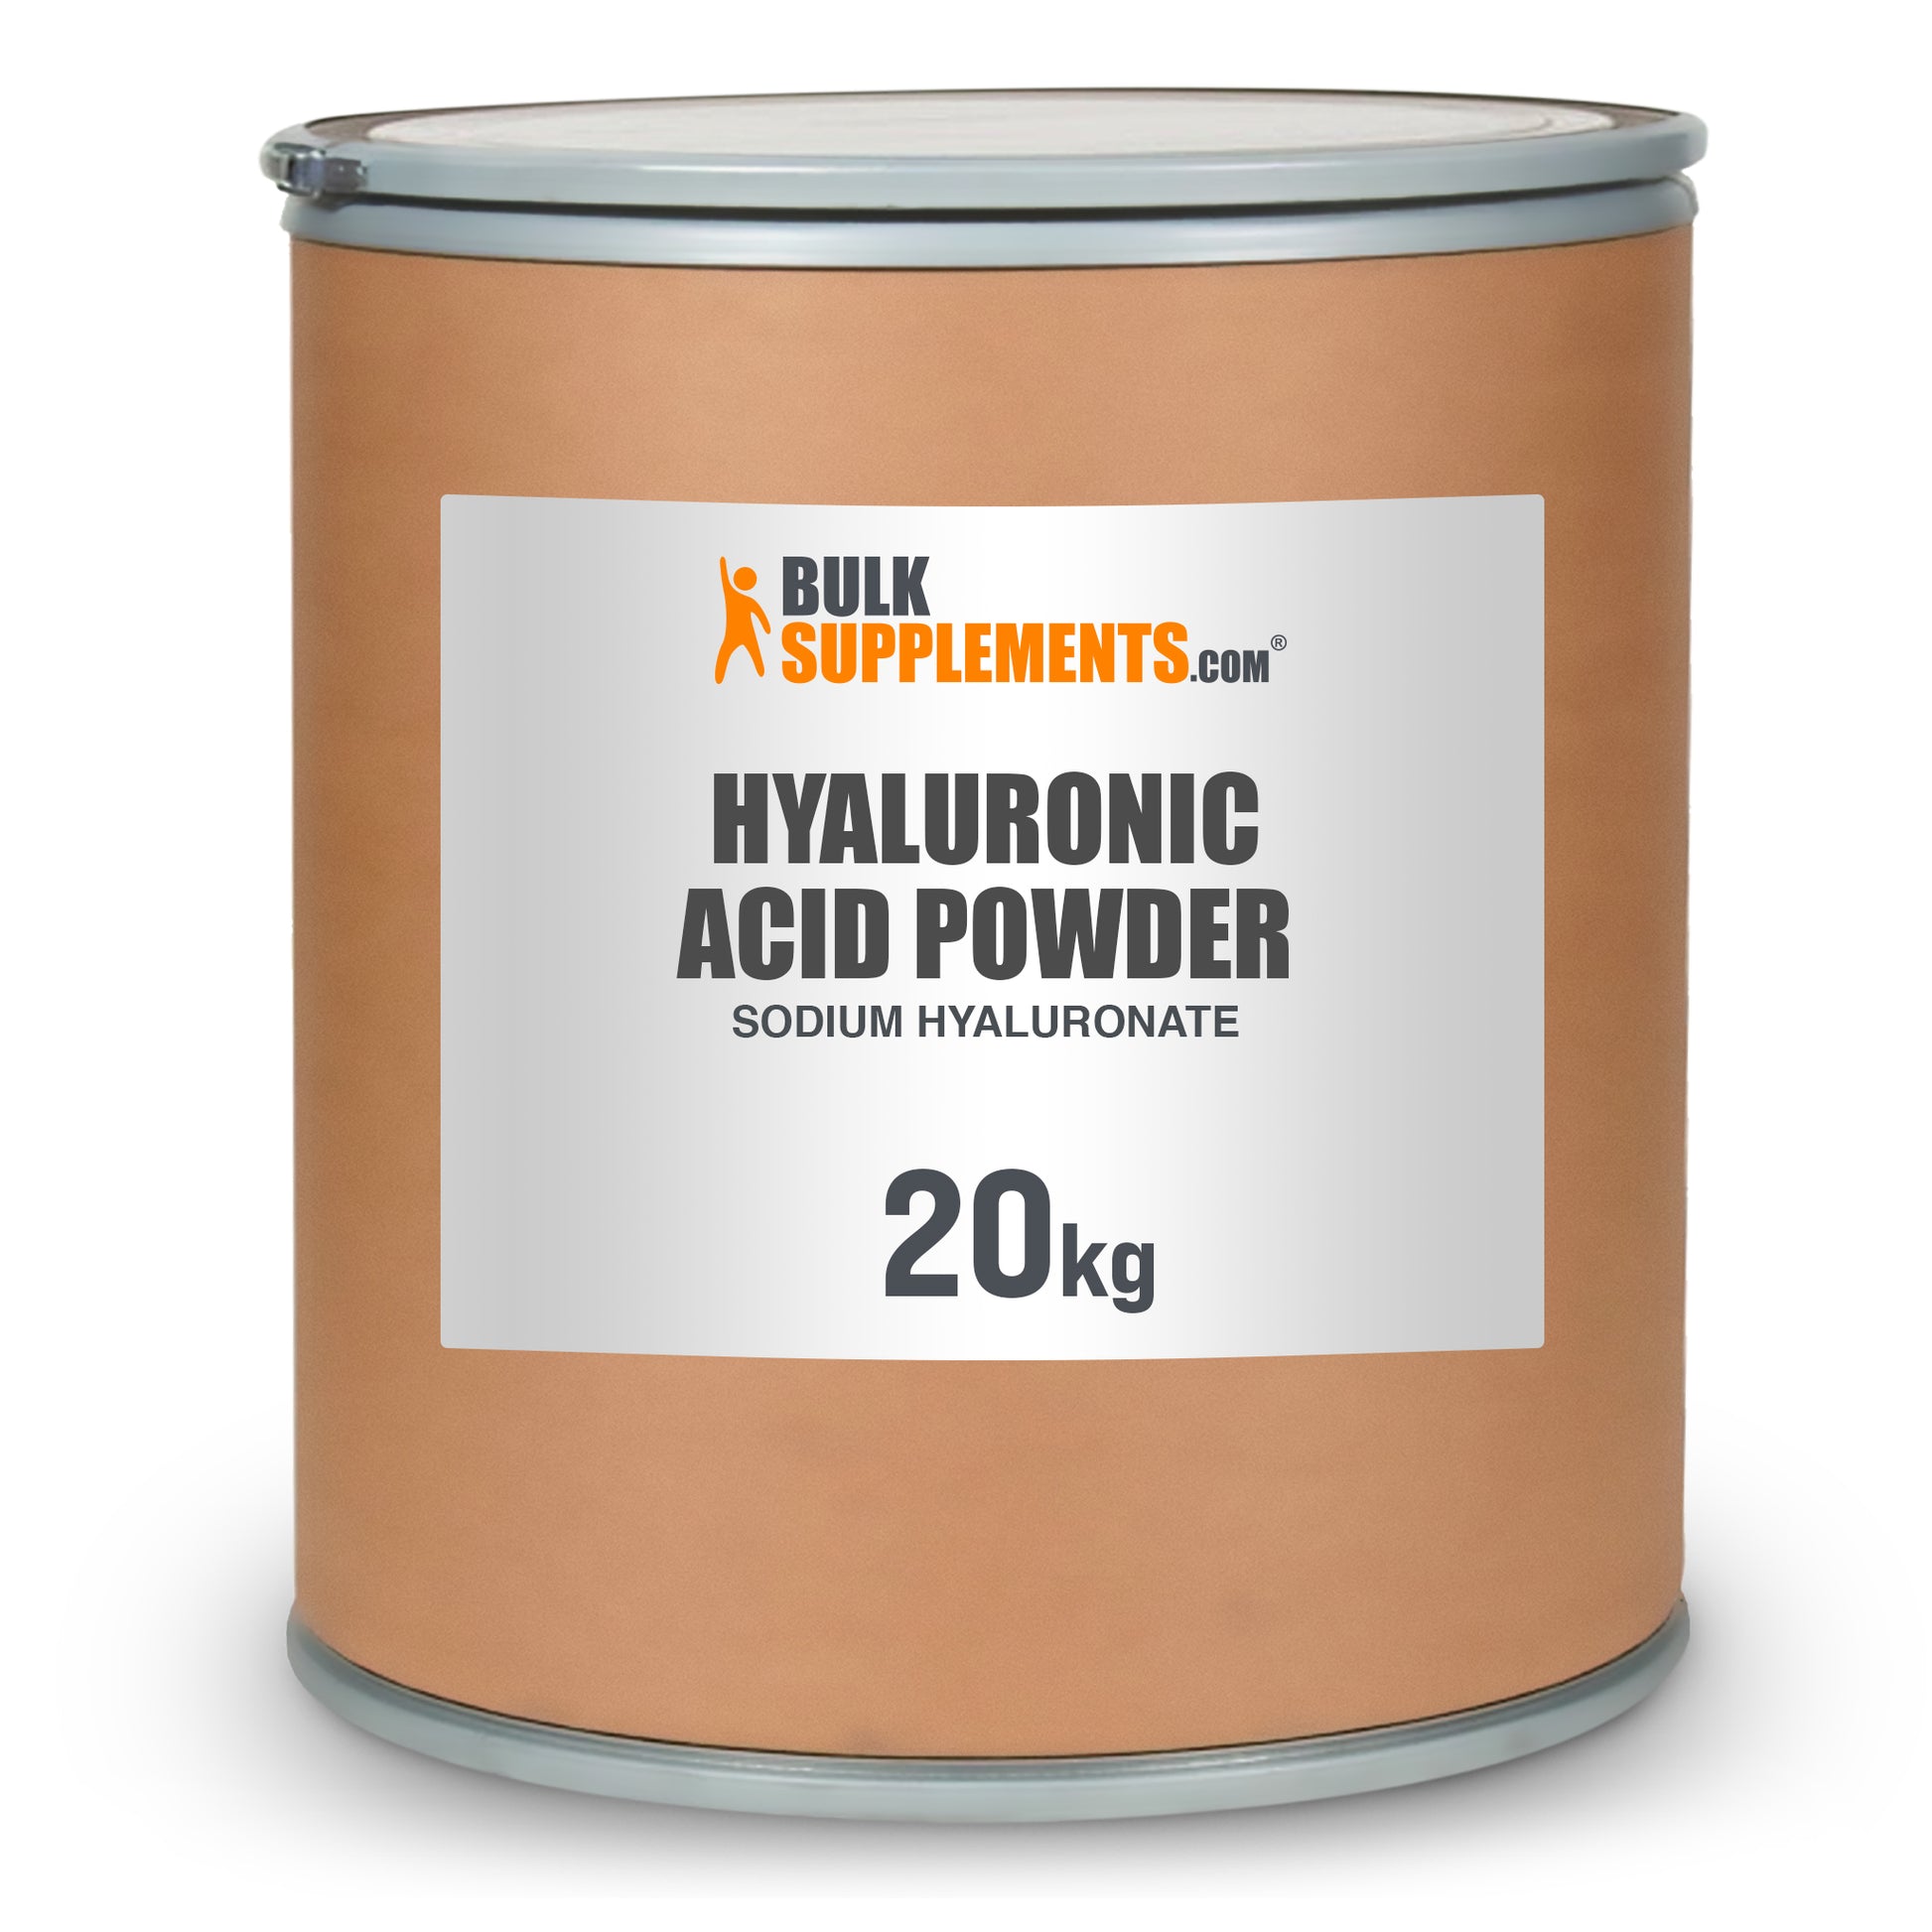 Hyaluronic Acid powder 20kg